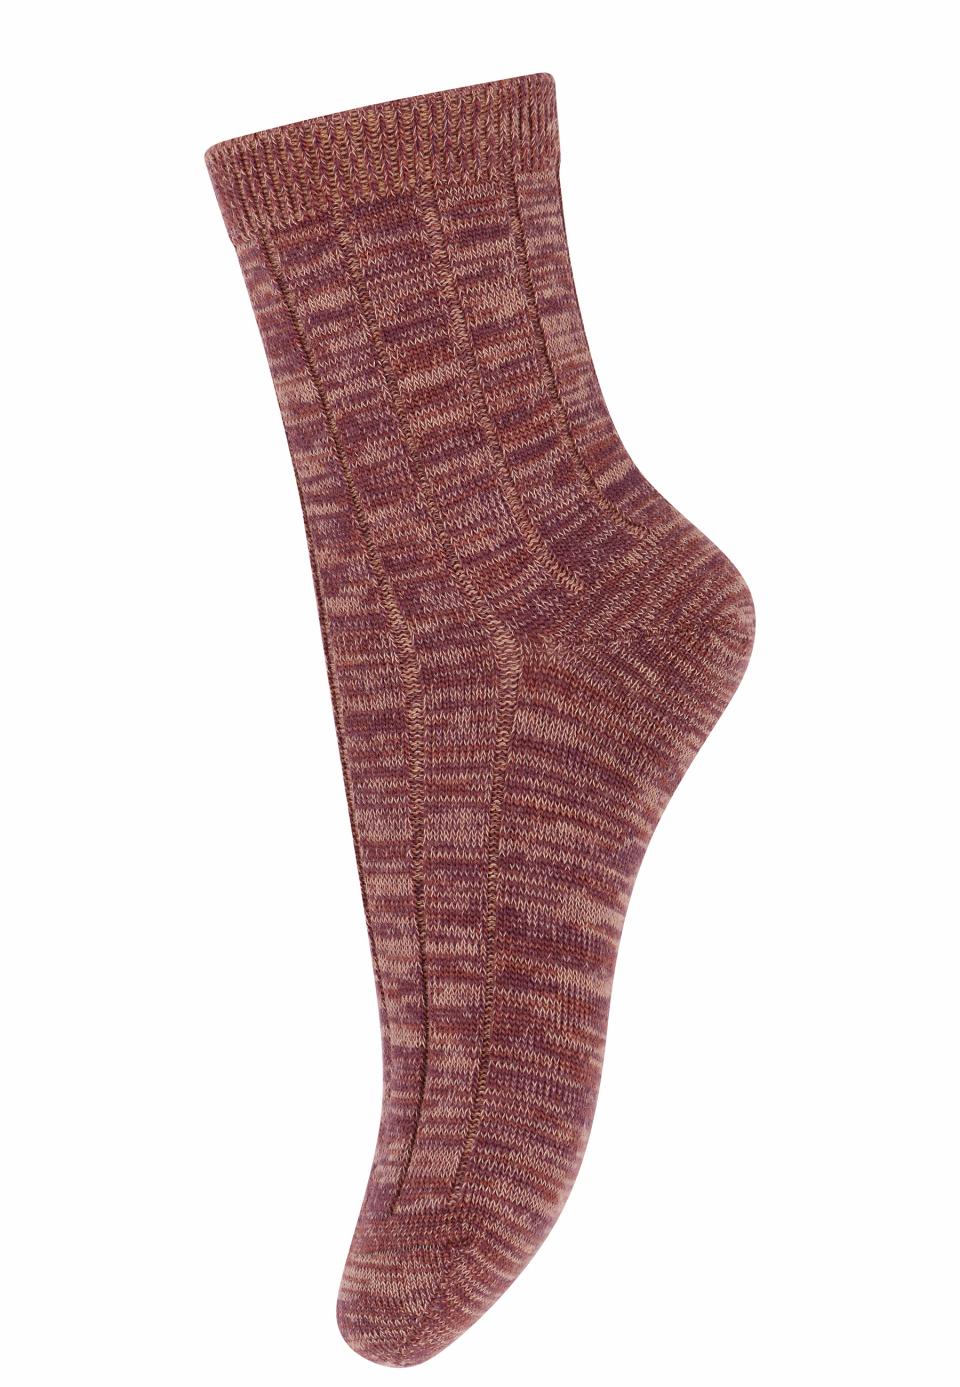 MP Denmark - Vian socks - 59053 2315 - copper brown - Hyggekids